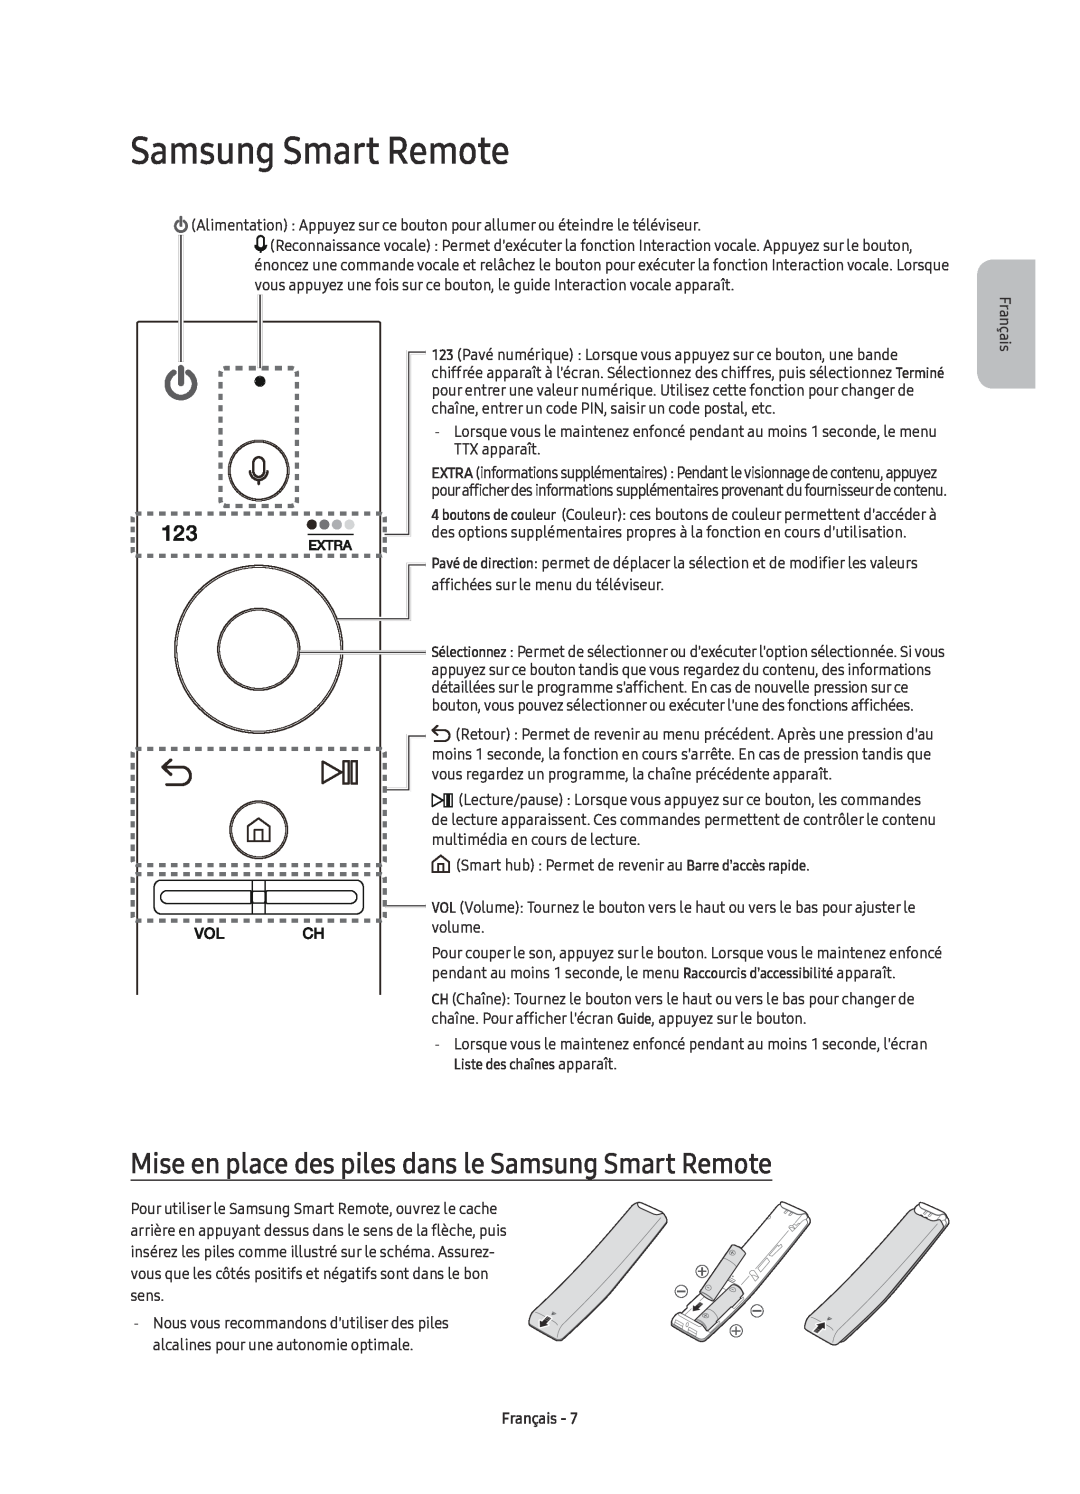 Samsung UE55KU6510UXZF, UE55KU6510UXZG, UE49KU6510UXZG Mise en place des piles dans le Samsung Smart Remote, Français 